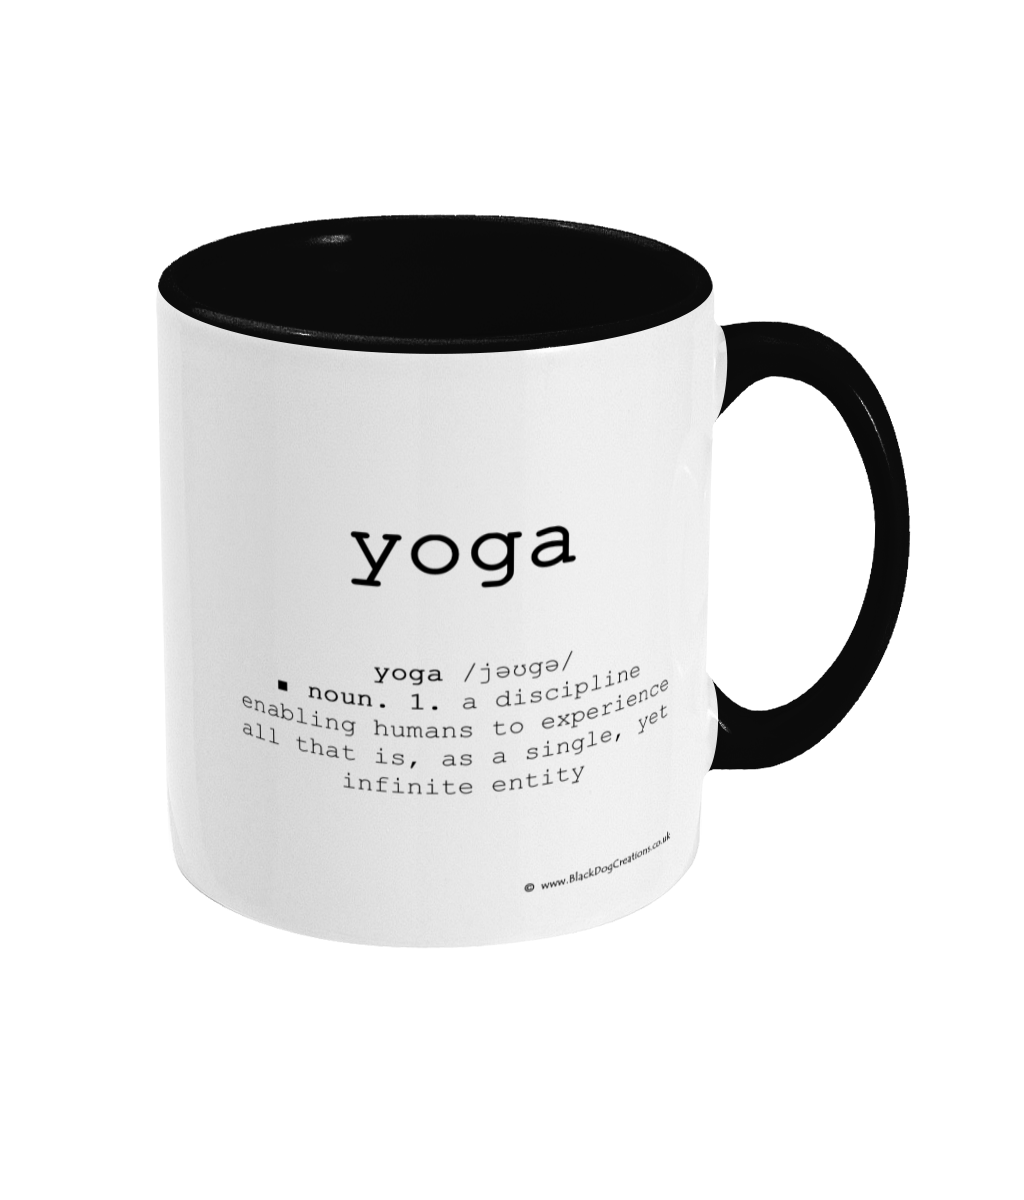 Yoga Definition Mug  Yoga gifts for yoga lovers by